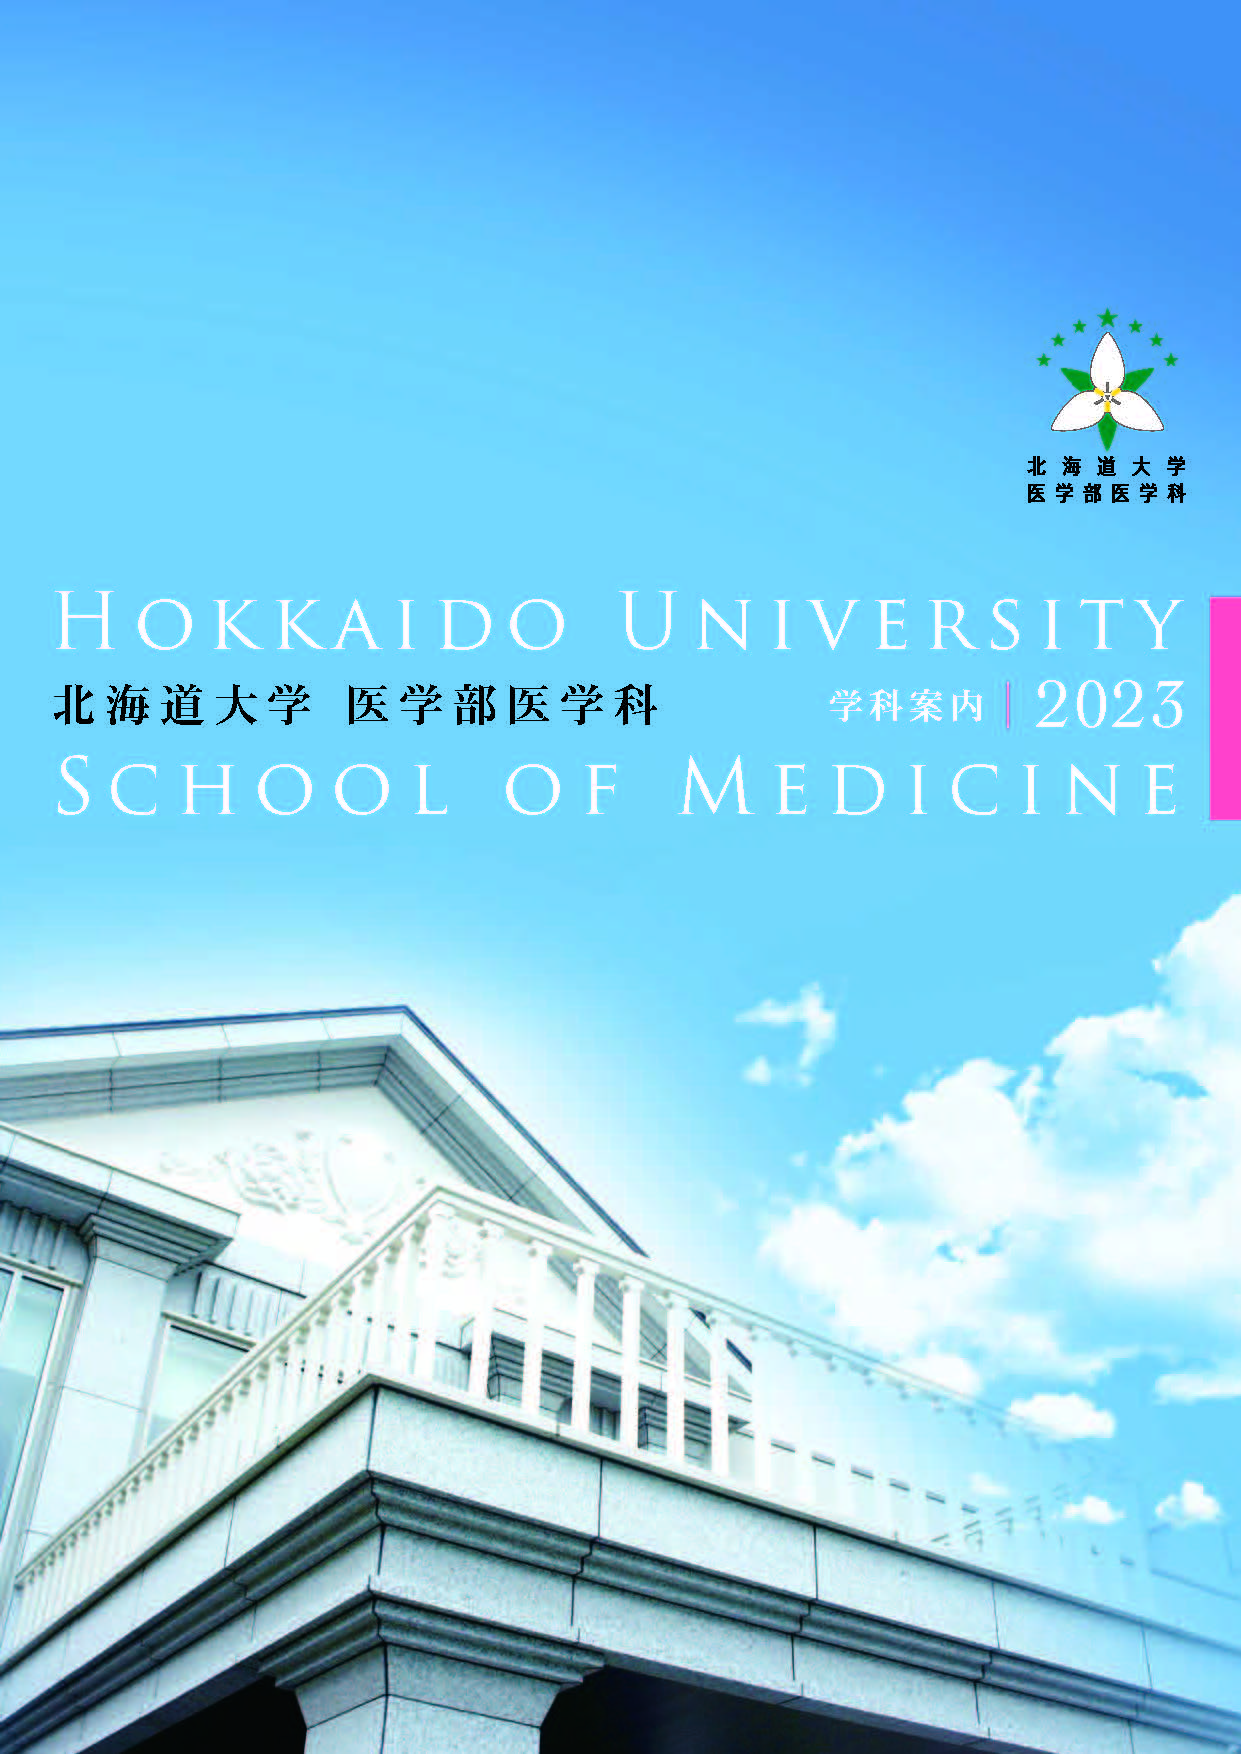 Guidebook of the School of Medicine